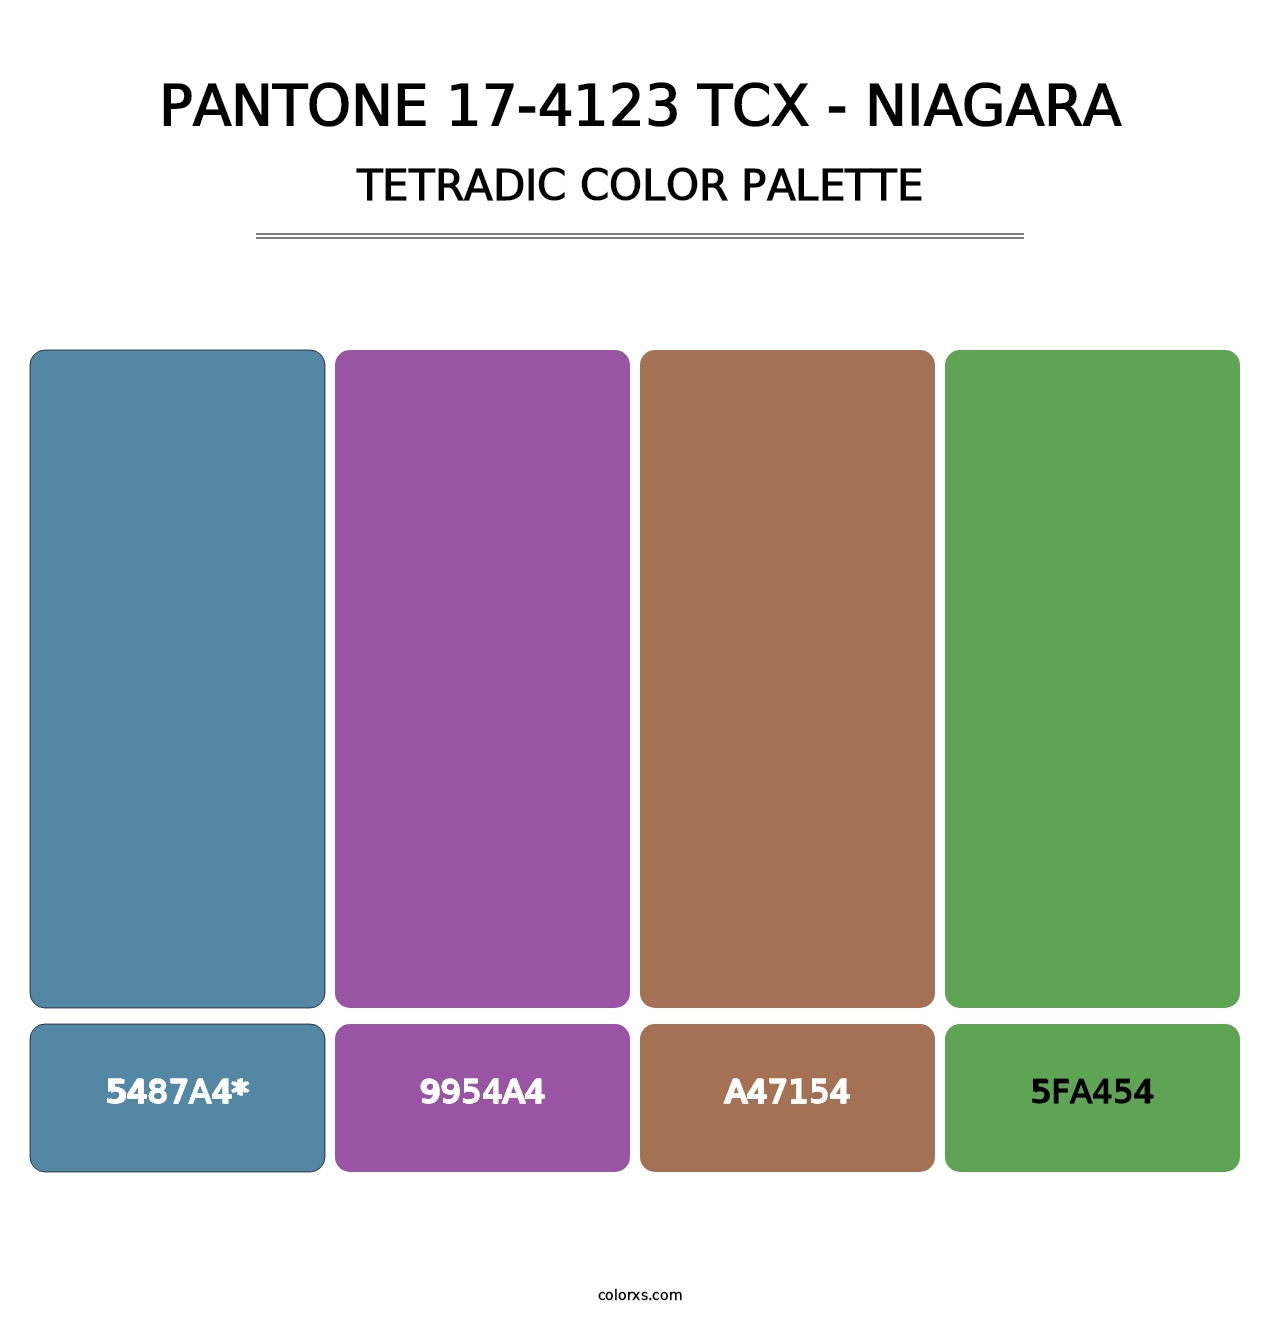 PANTONE 17-4123 TCX - Niagara - Tetradic Color Palette